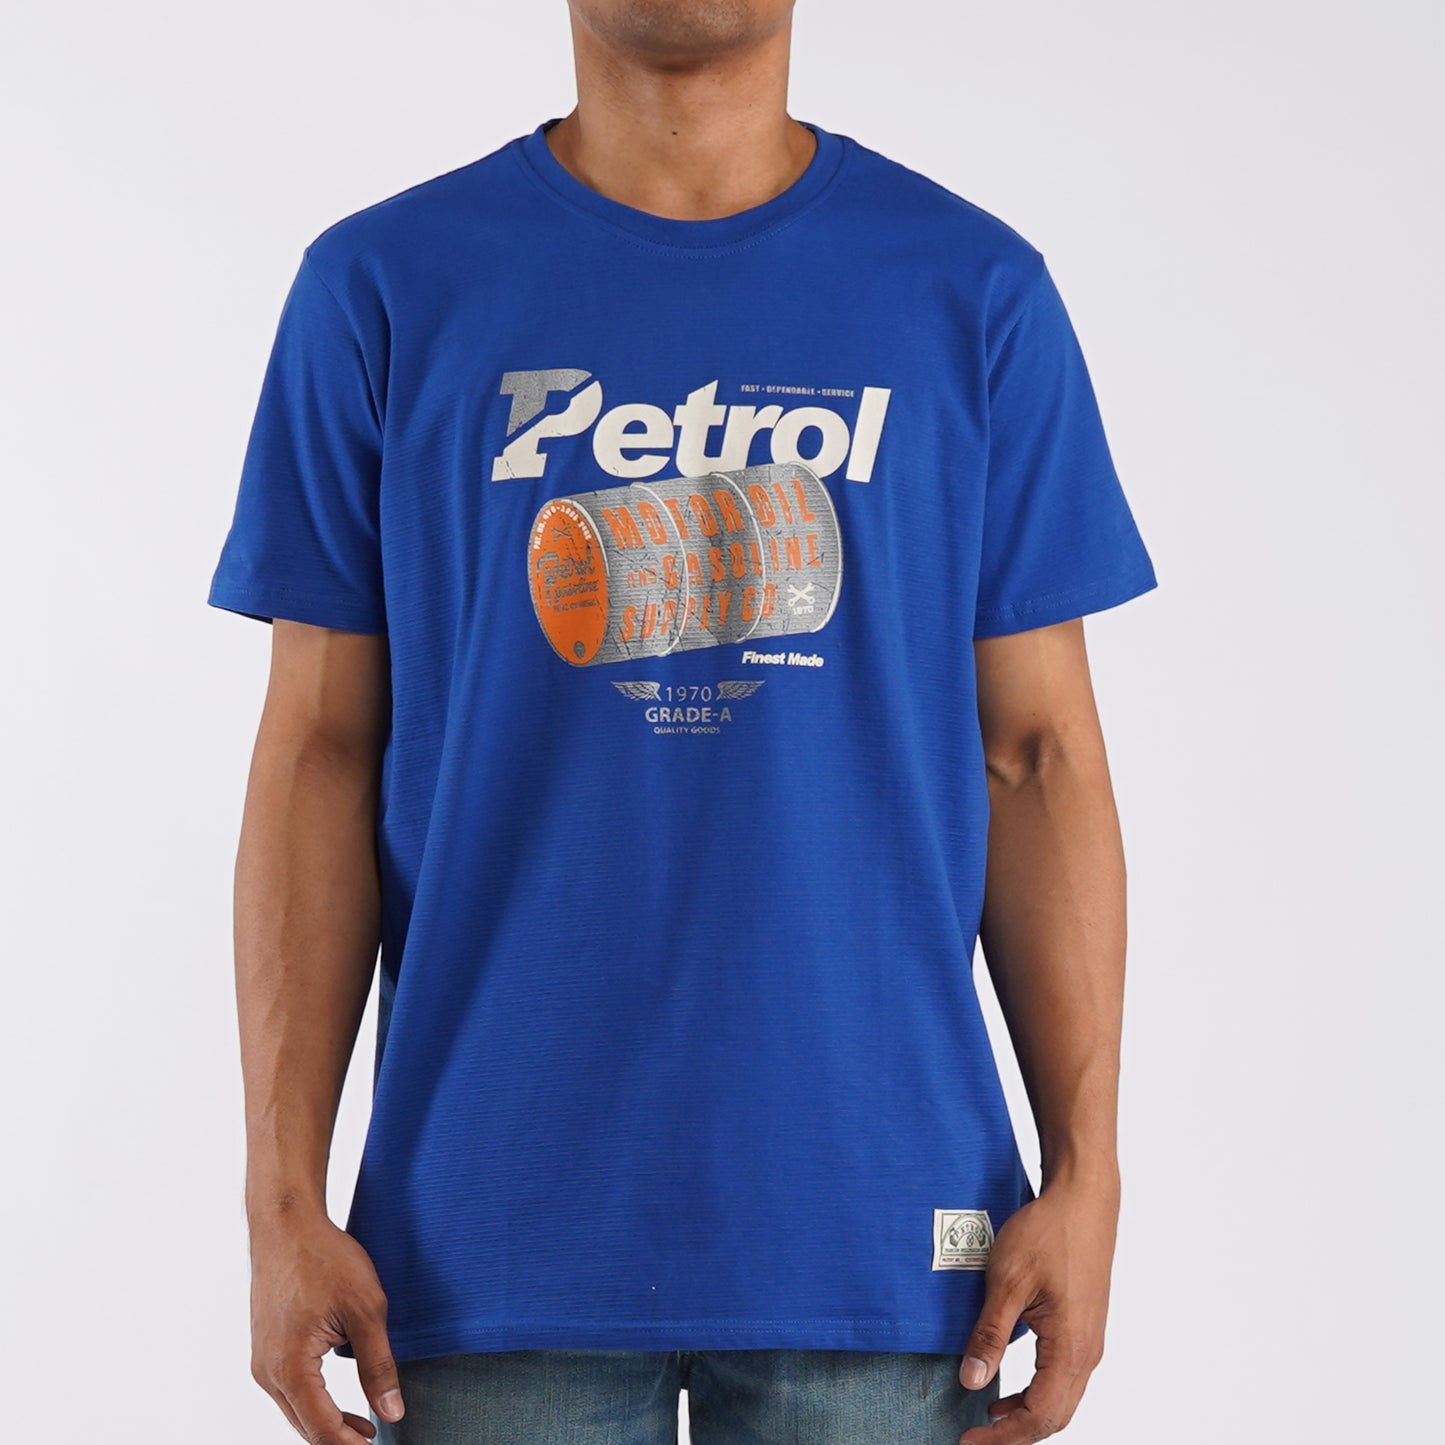 Petrol Basic Tees for Men Slim Fitting Trendy fashion Casual Top True Blue T-shirt for Men 113612 (True Blue)